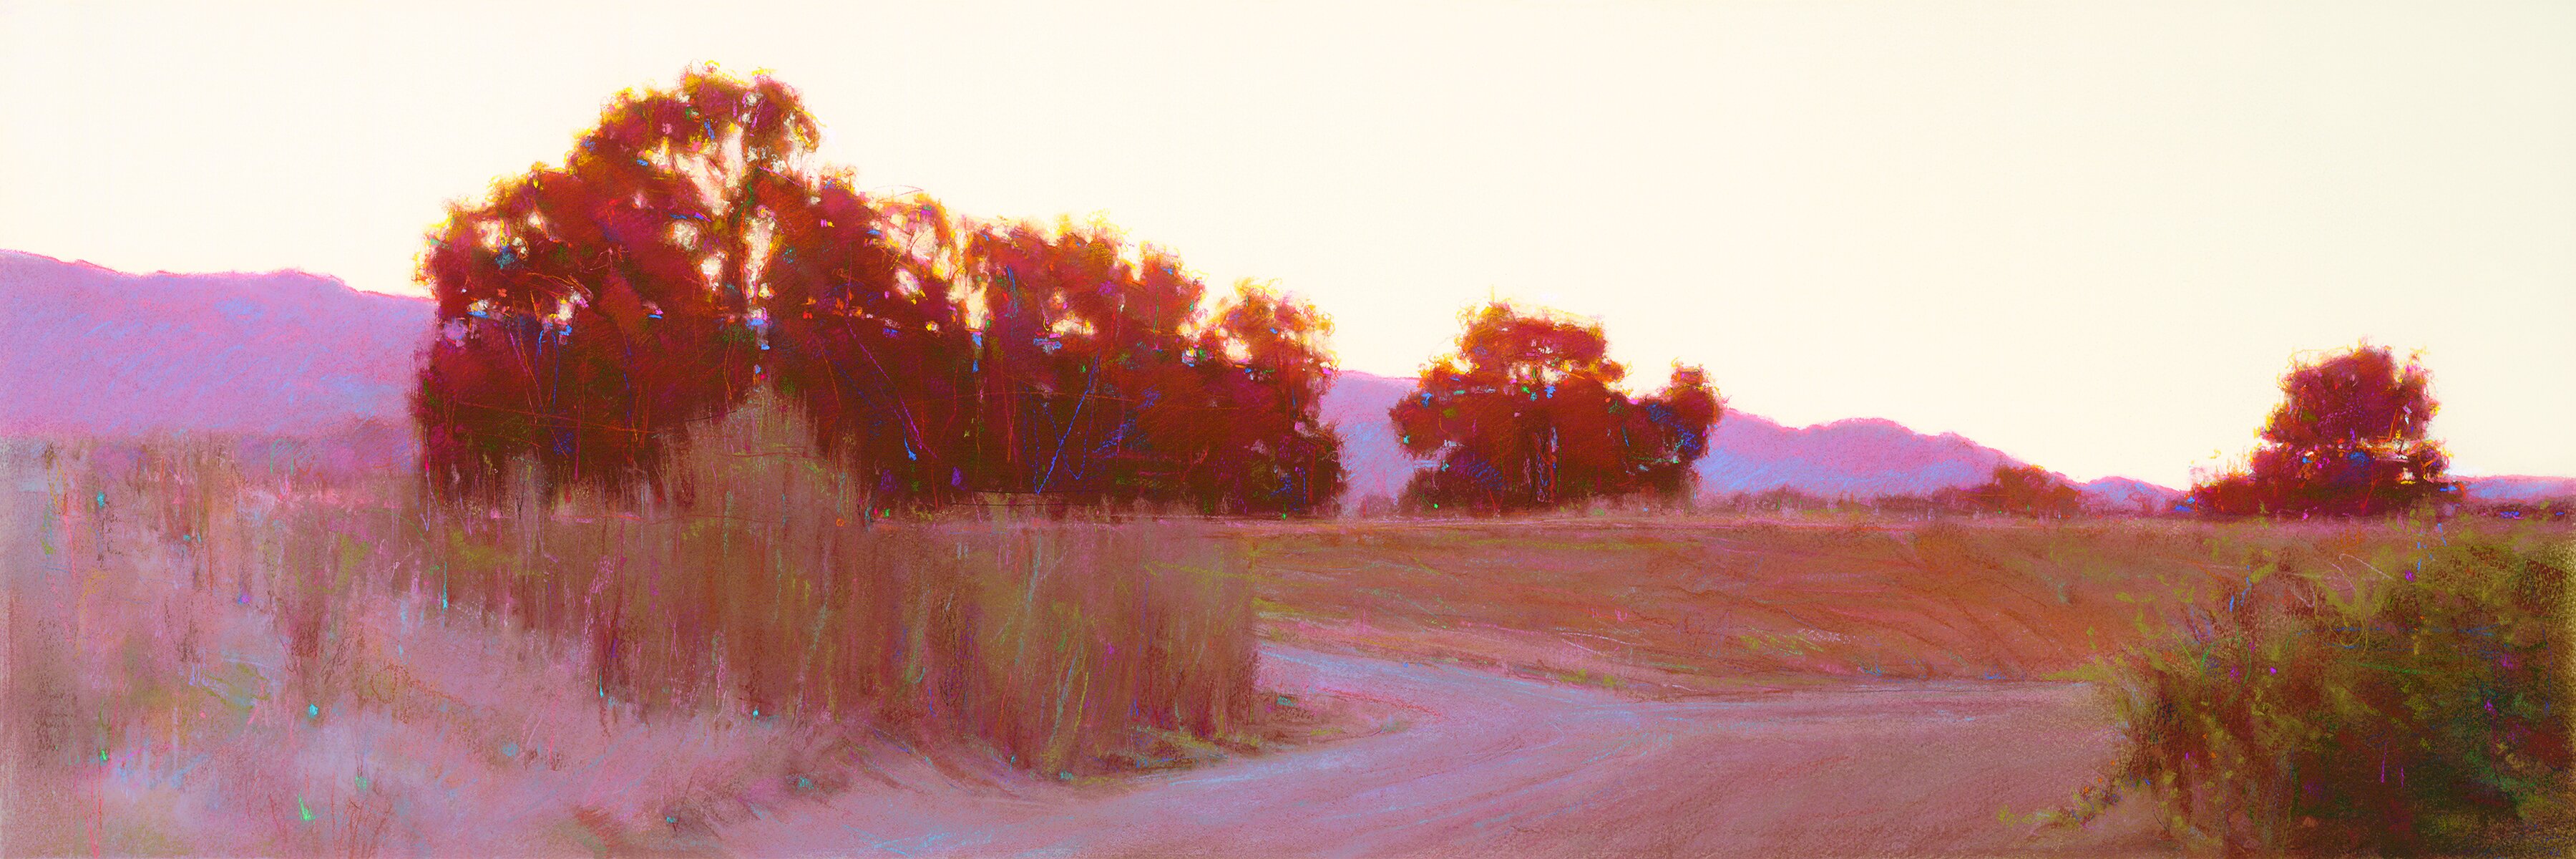 Steven Gordon; My Path, 2000, Original Giclee Reproduction, 40 x 13 inches. Artwork description: 241  Napa Valley Sunset ...